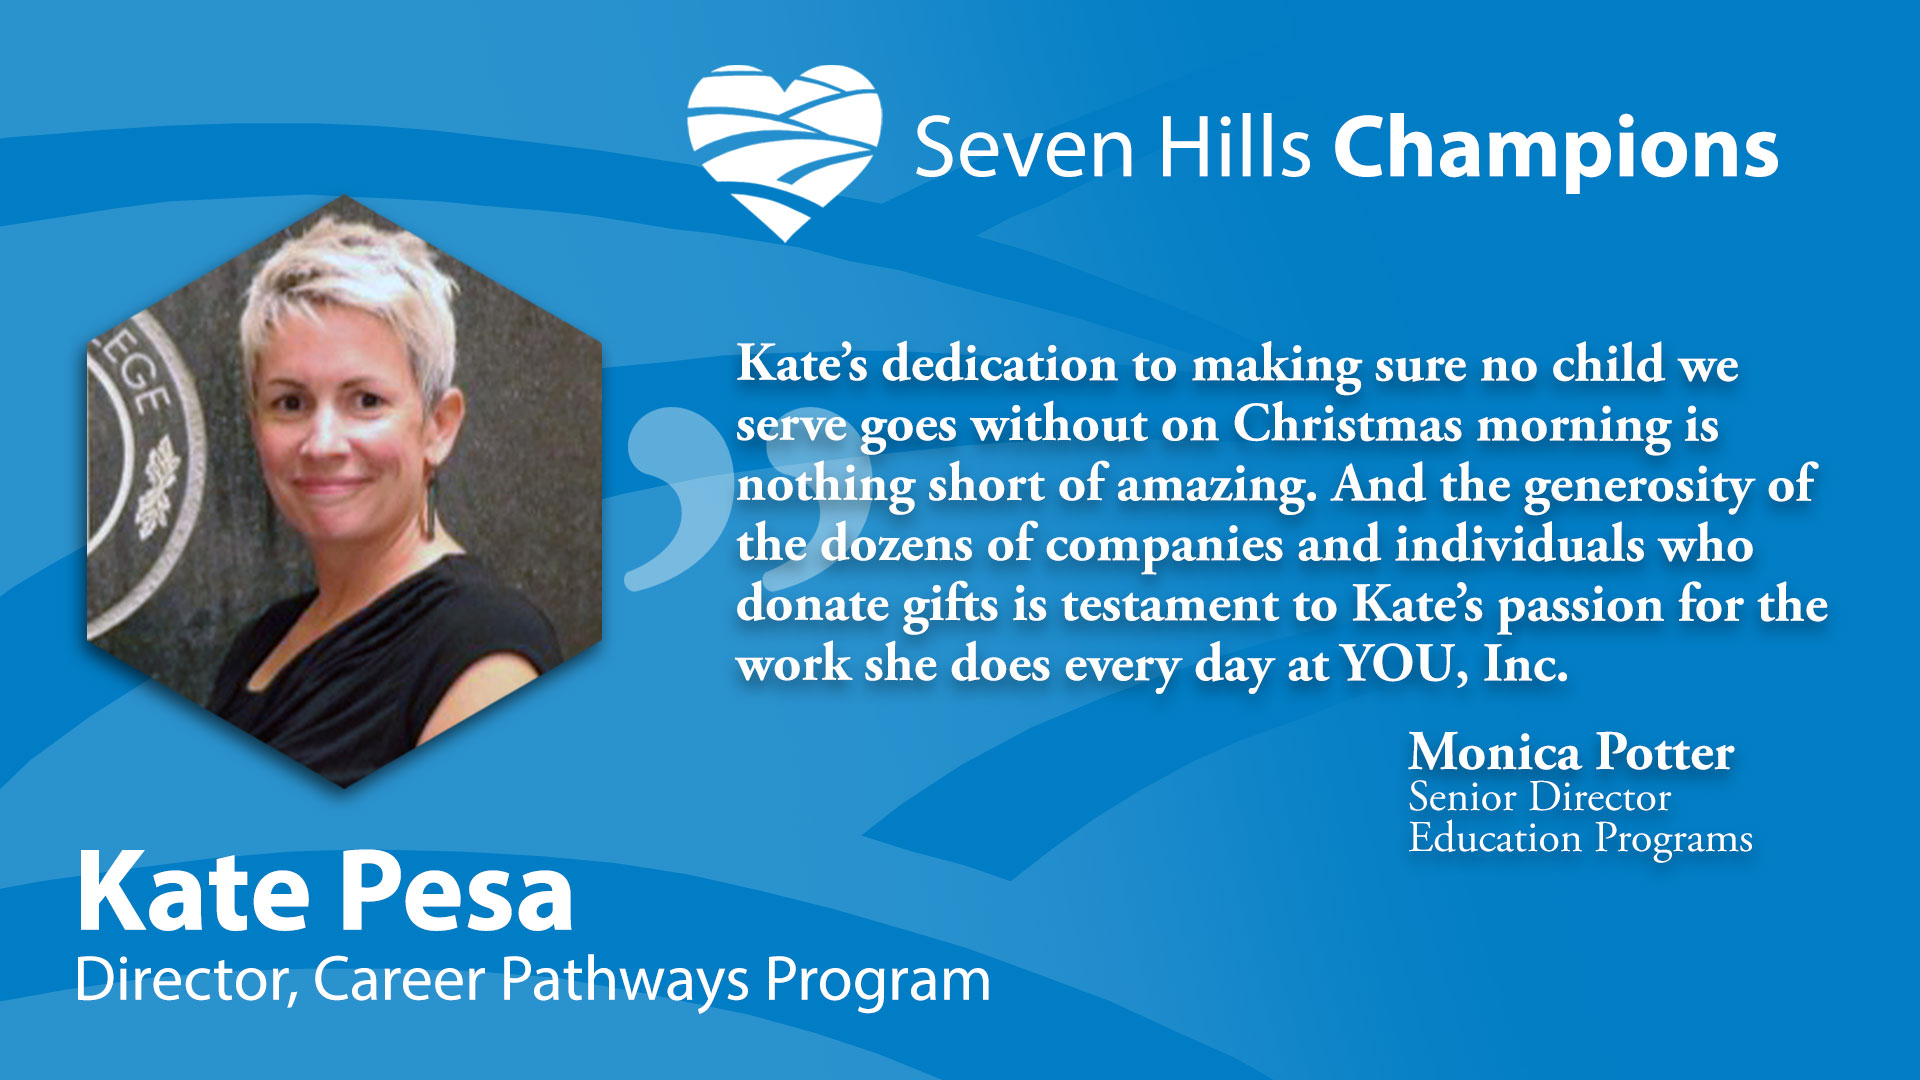 Introducing Seven Hills Champion, Kate Pesa